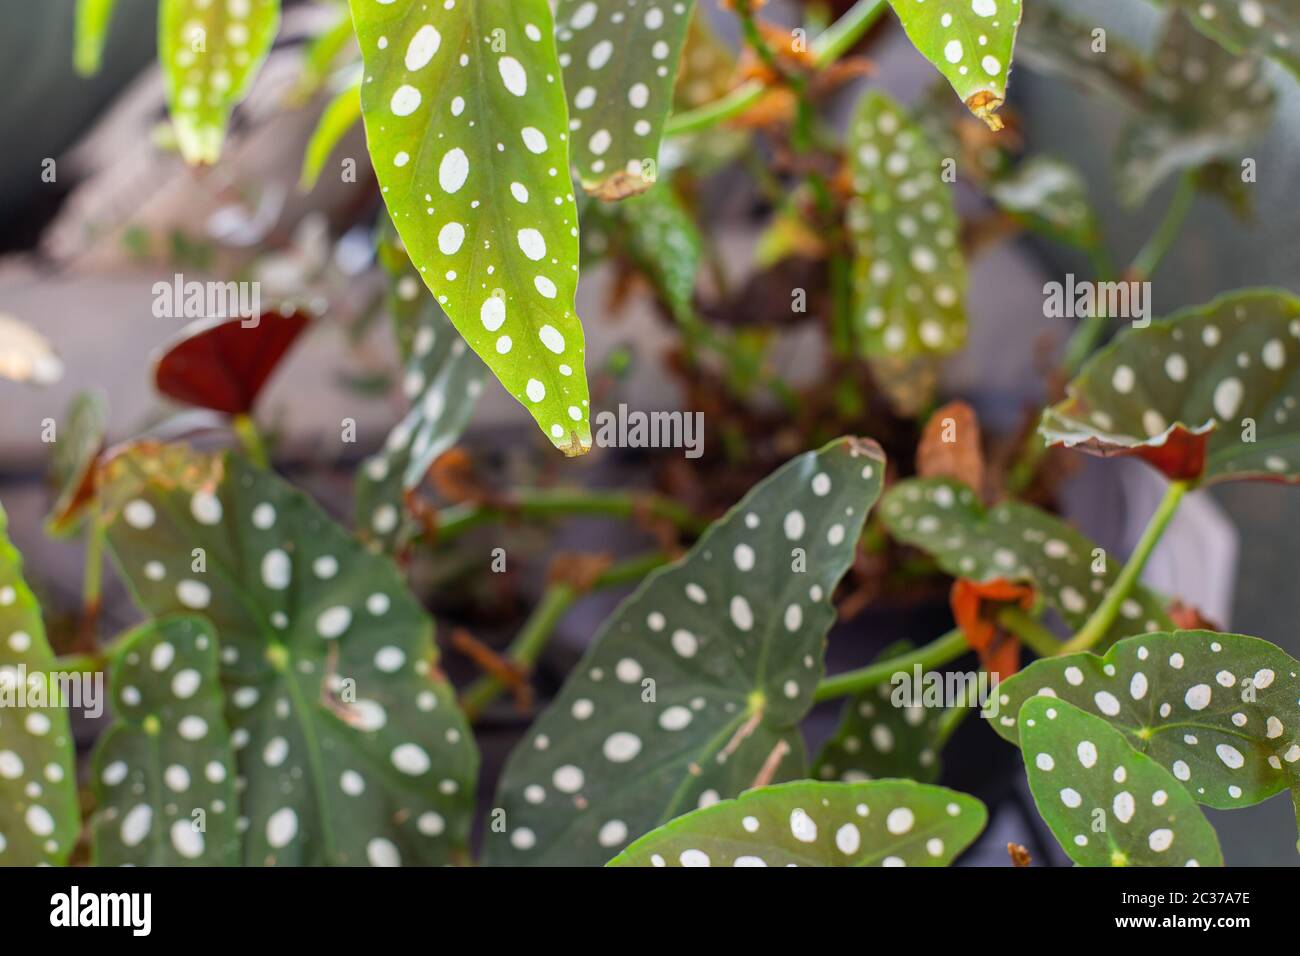 Begonia Maculata ,Polka Dot Begonia Background, retro modern houseplant close-up Stock Photo